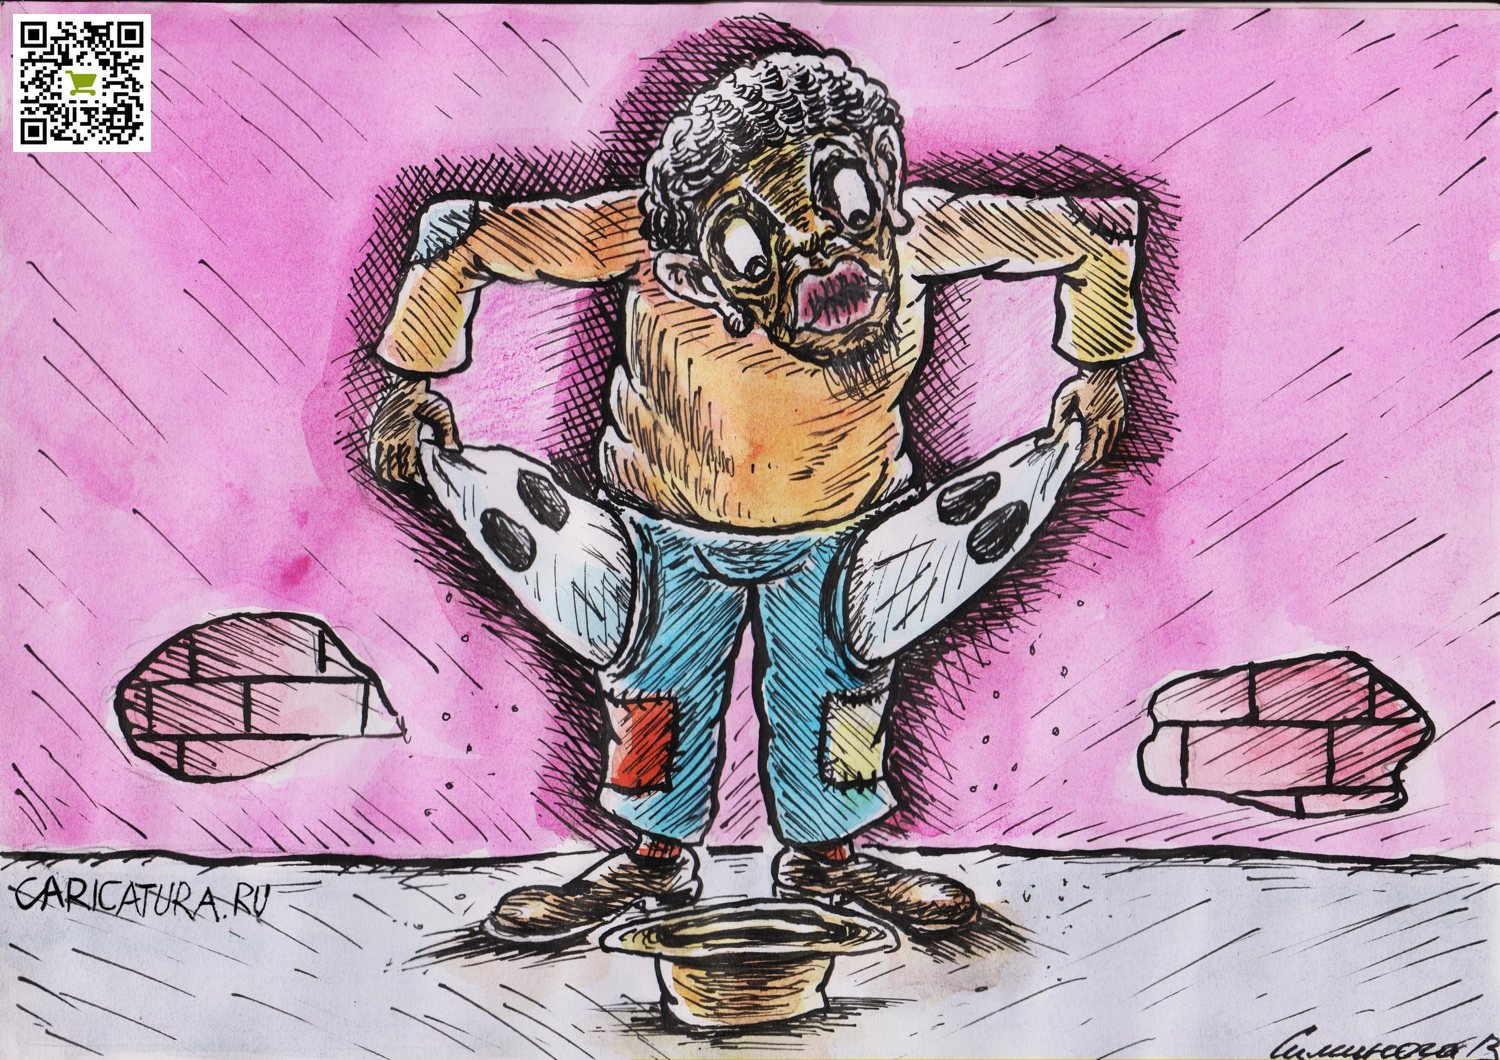 Карикатура "Бедность", Vadim Siminoga